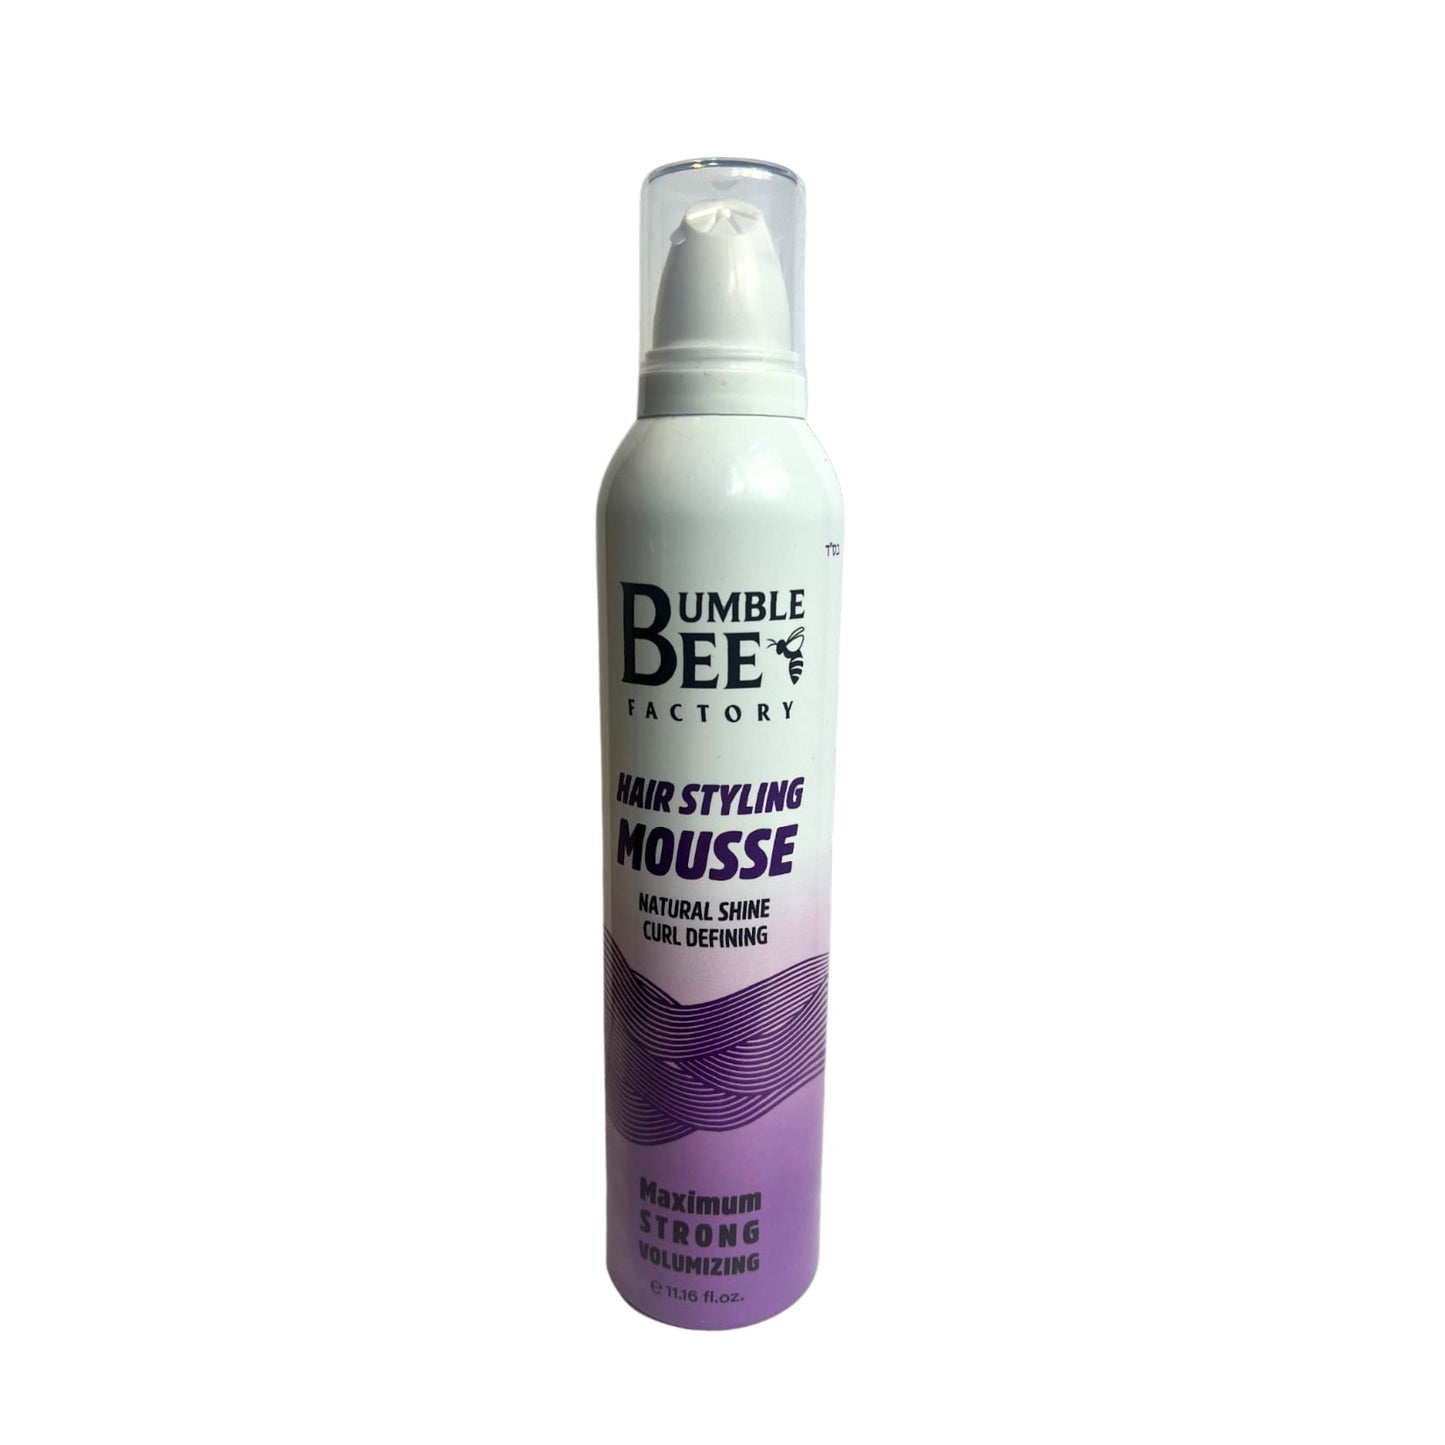 BUMBLE BEE Hair Styling Mousse Natural Shine Curl Defining, Maximun Strong Volumizing 11.16 Oz